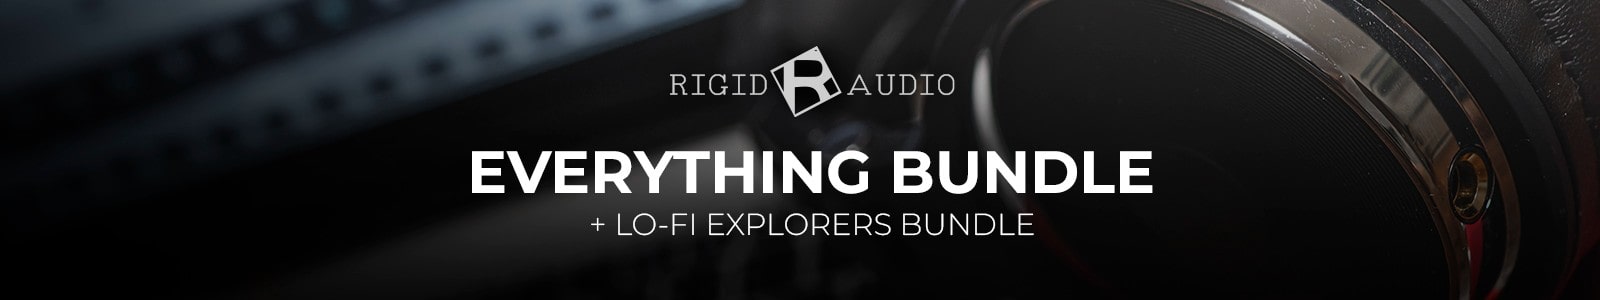 Rigid Audio Everything Bundle